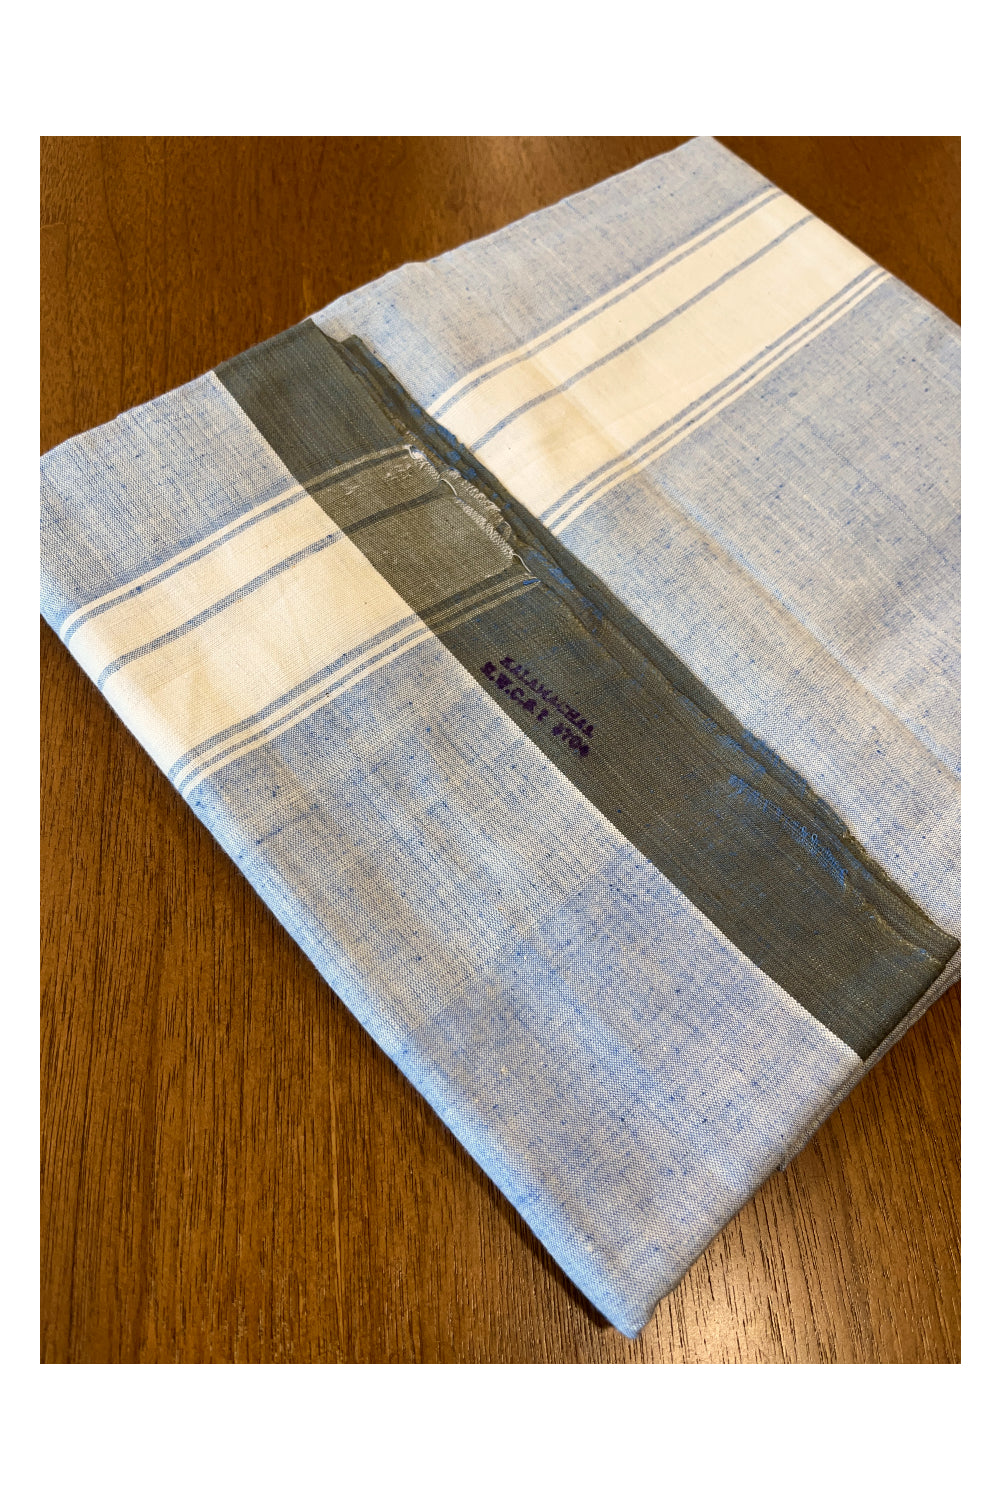 Southloom Premium Handloom Blue Shaded Solid Single Mundu (Lungi) with White Border